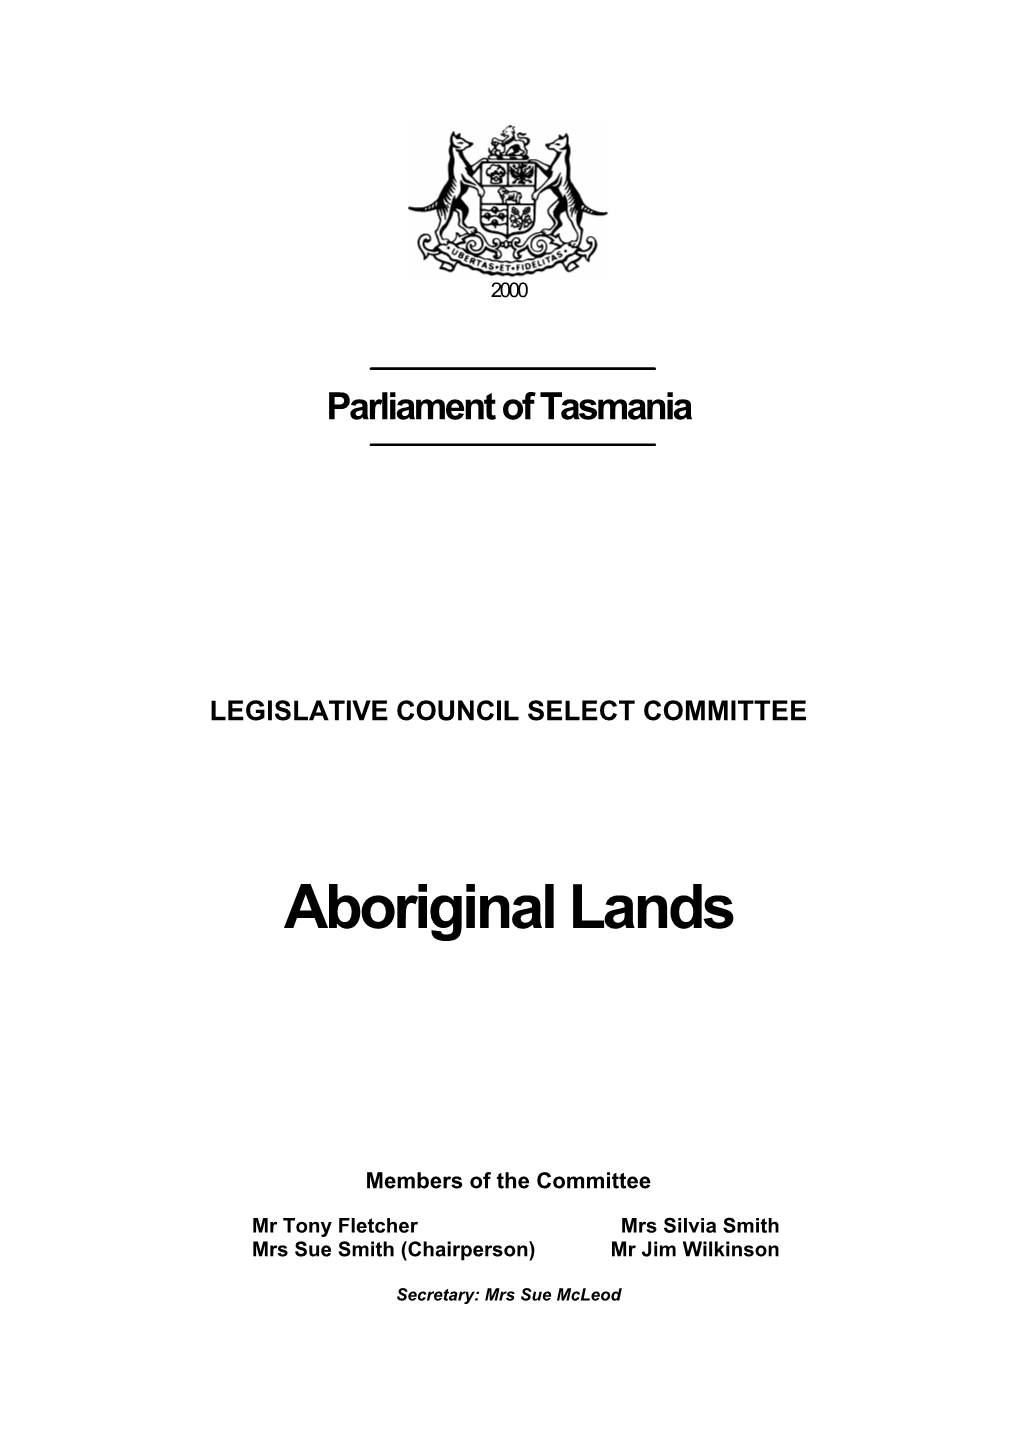 Legislative Council Select Committee on Aboriginal Lands, 27 January 2000, P